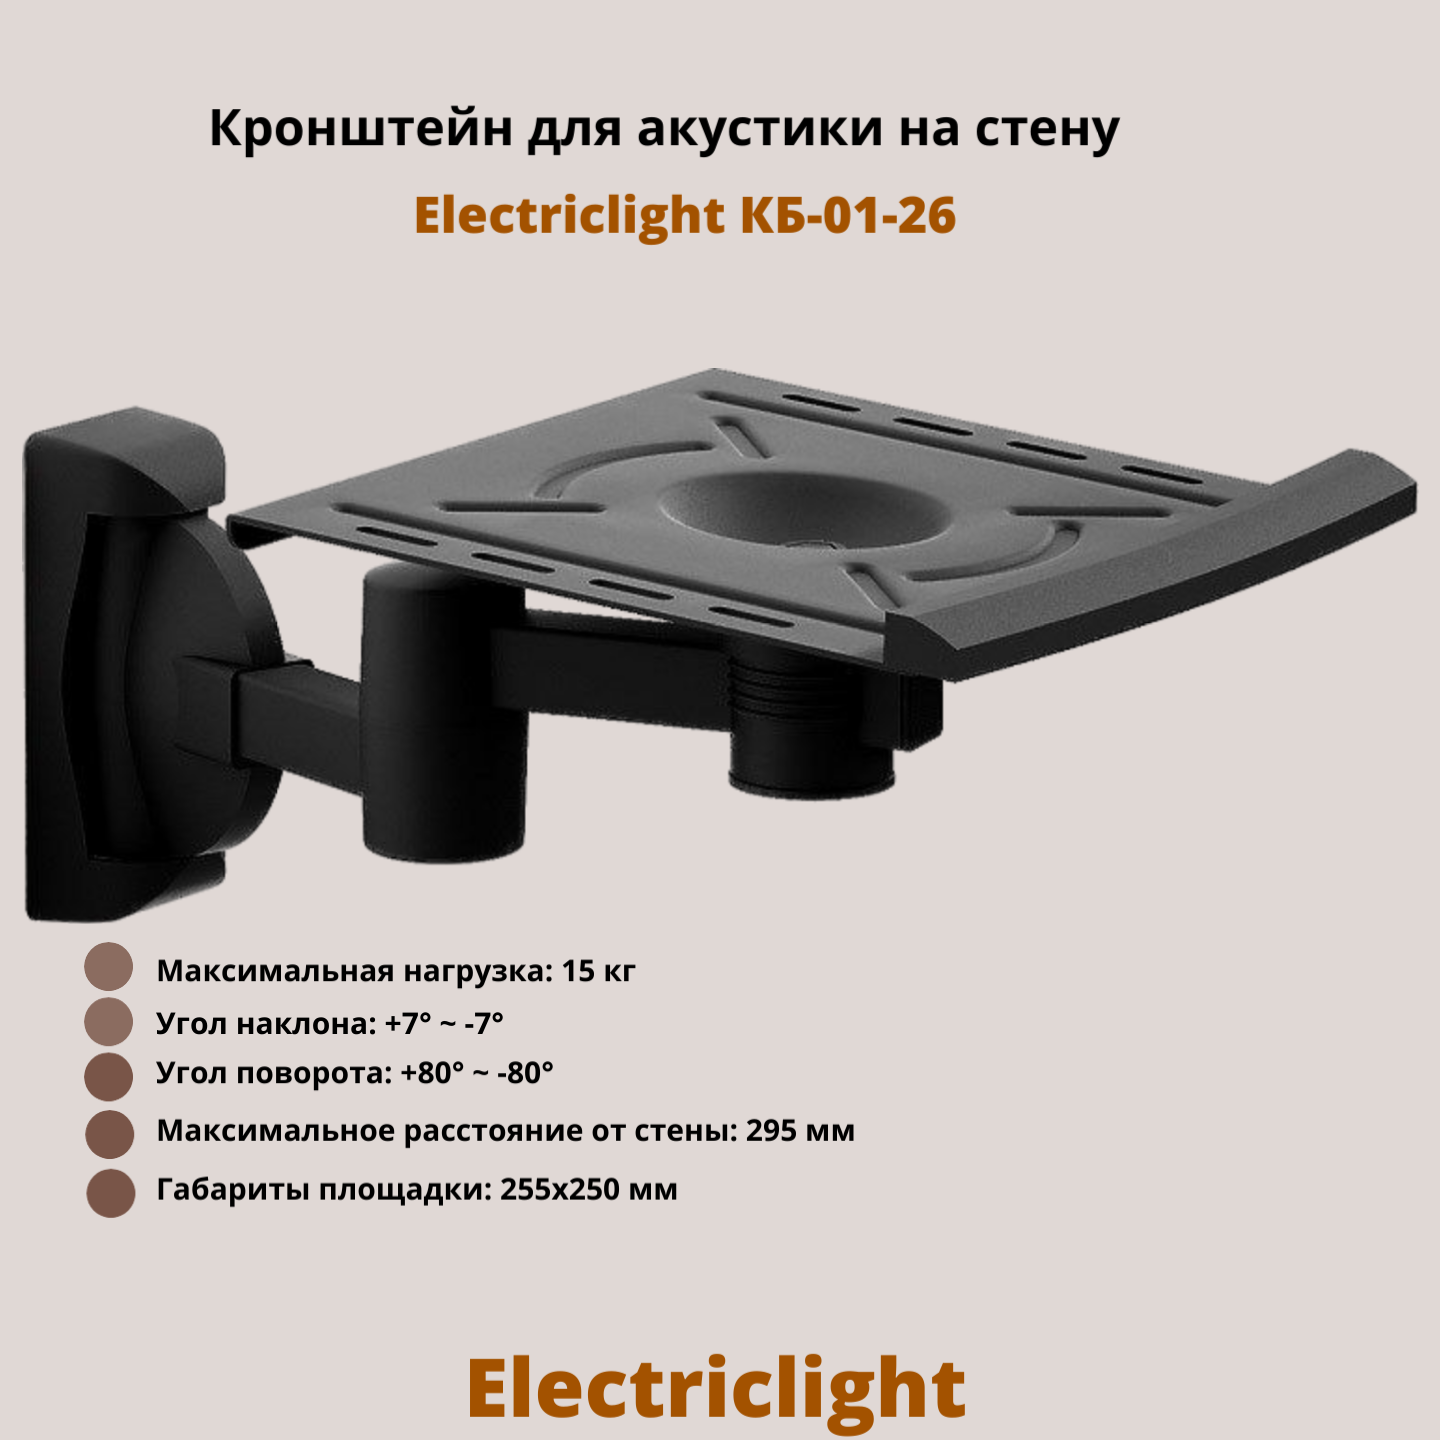 Кронштейн для акустики на стену наклонно-поворотный Electriclight КБ-01-26, черный